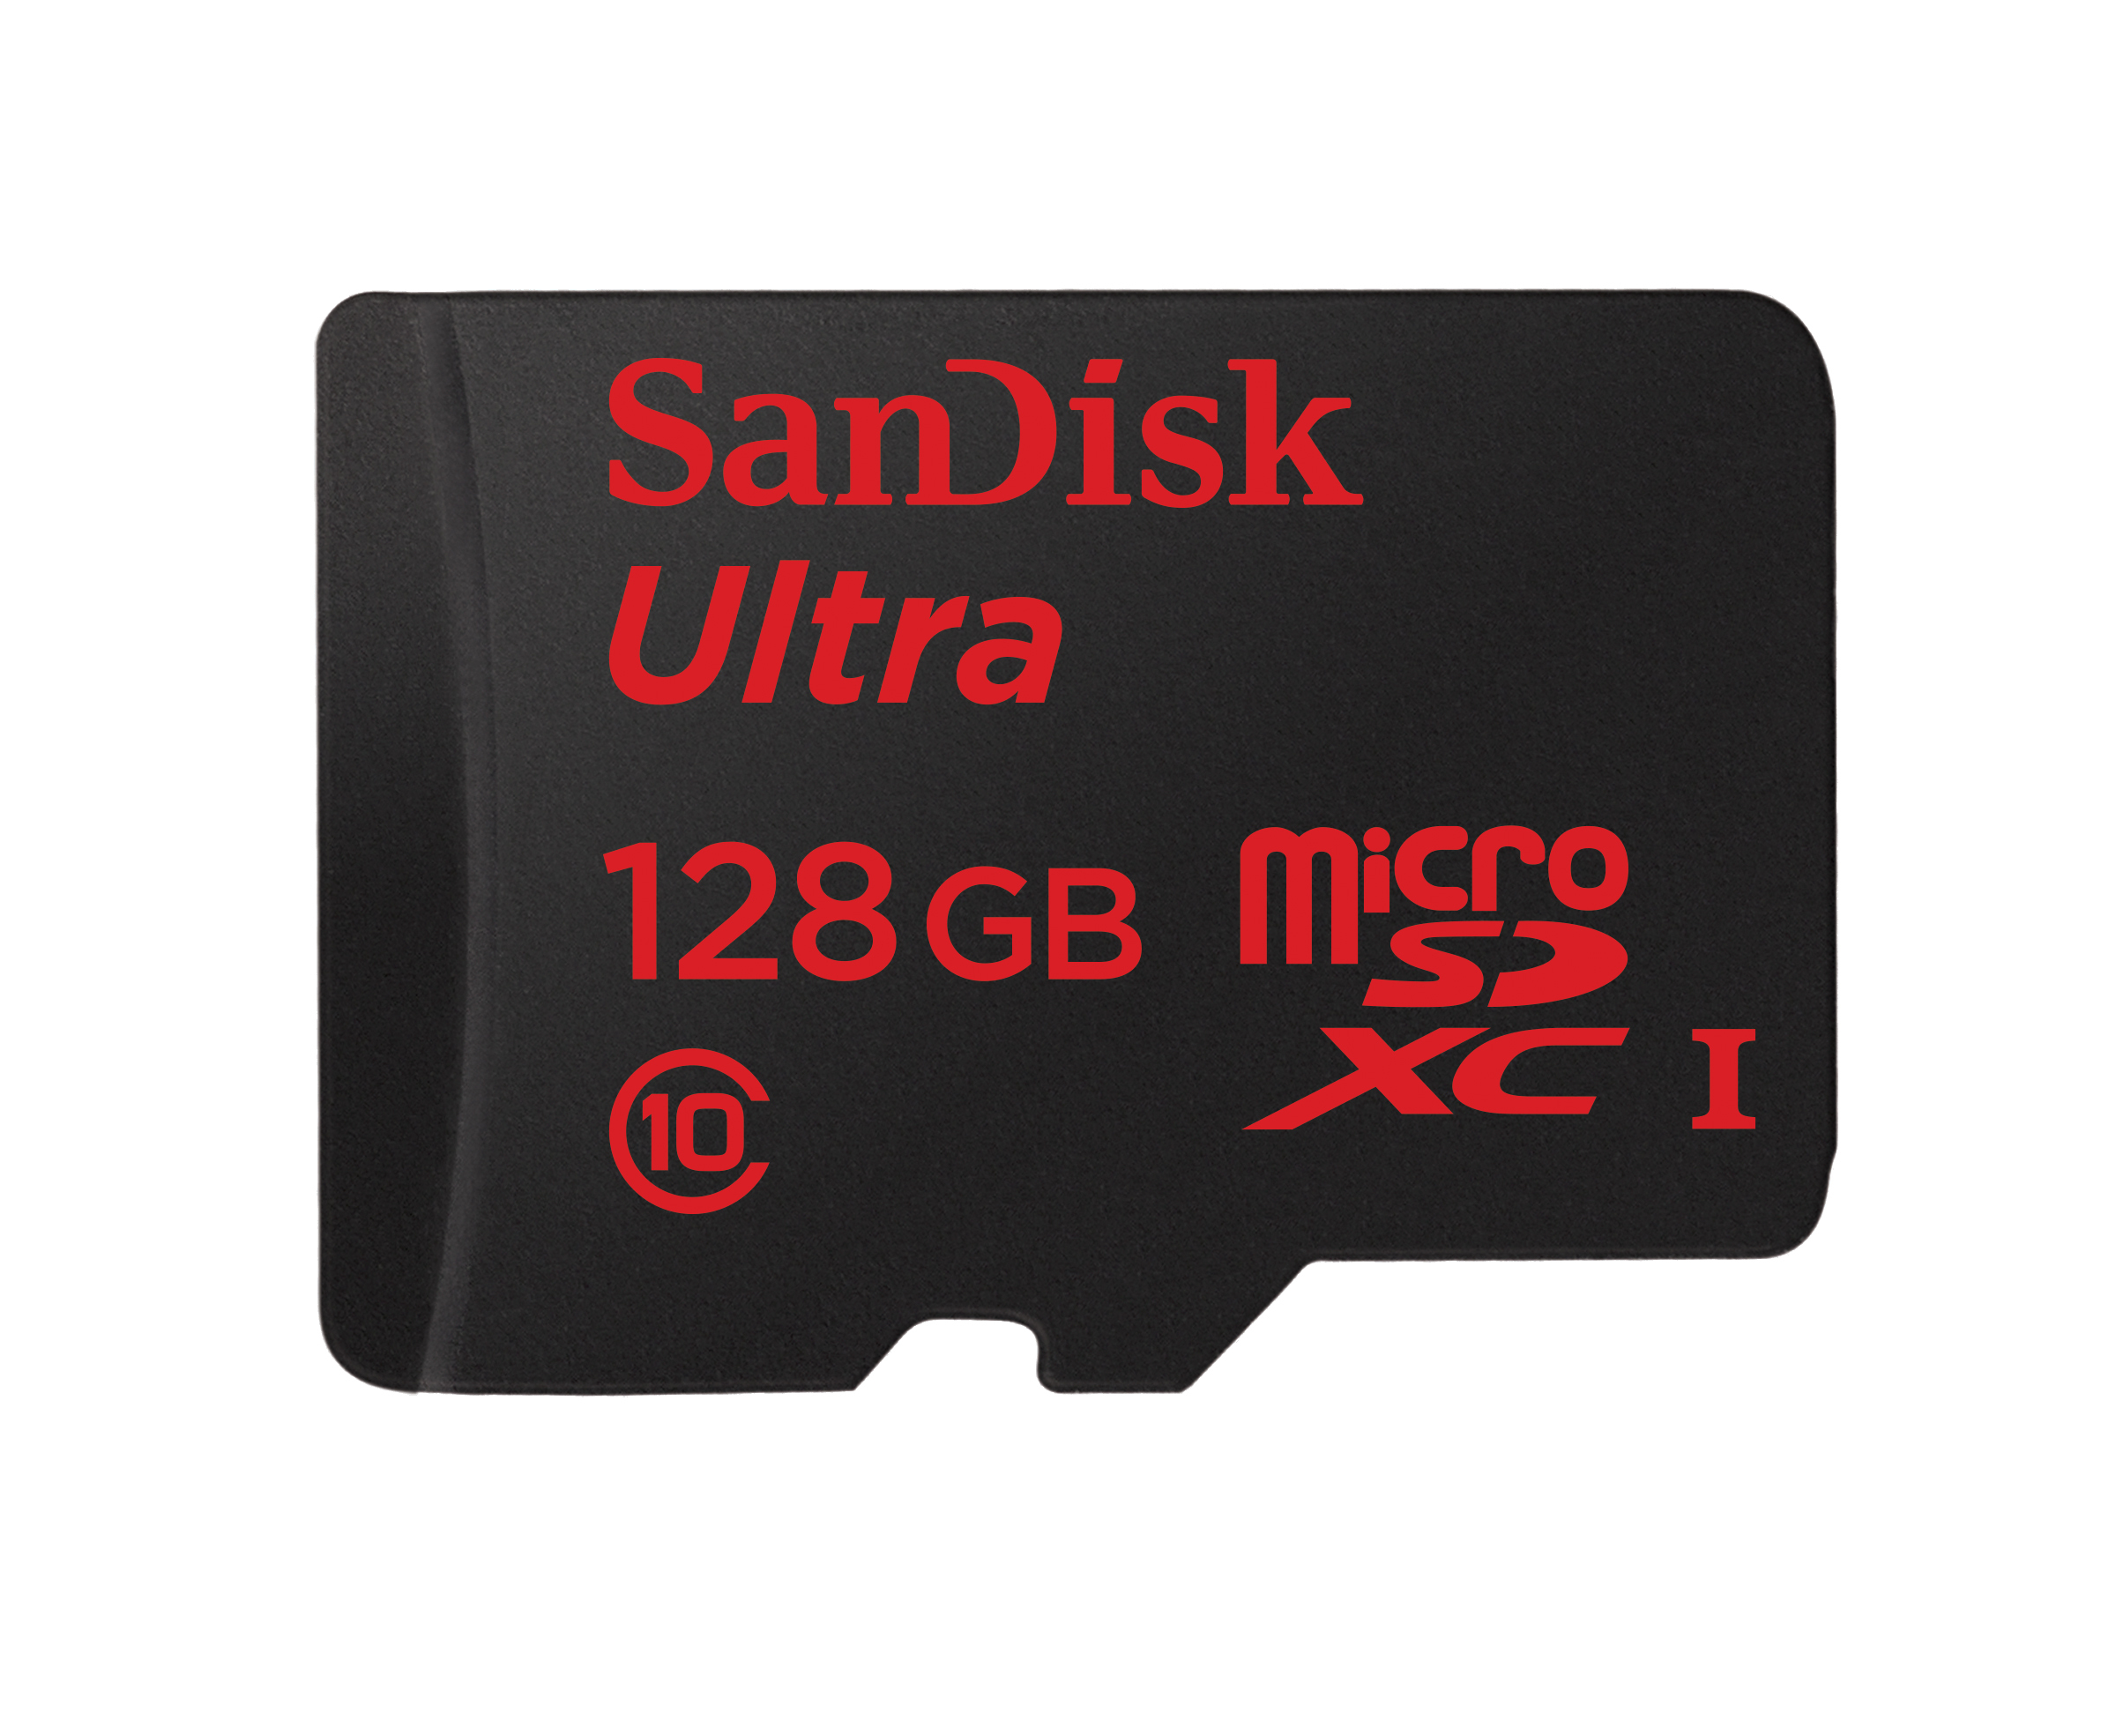 gewicht Aubergine natuurlijk SanDisk Introduces World's Highest Capacity microSDXC Memory Card at 128GB  | Business Wire